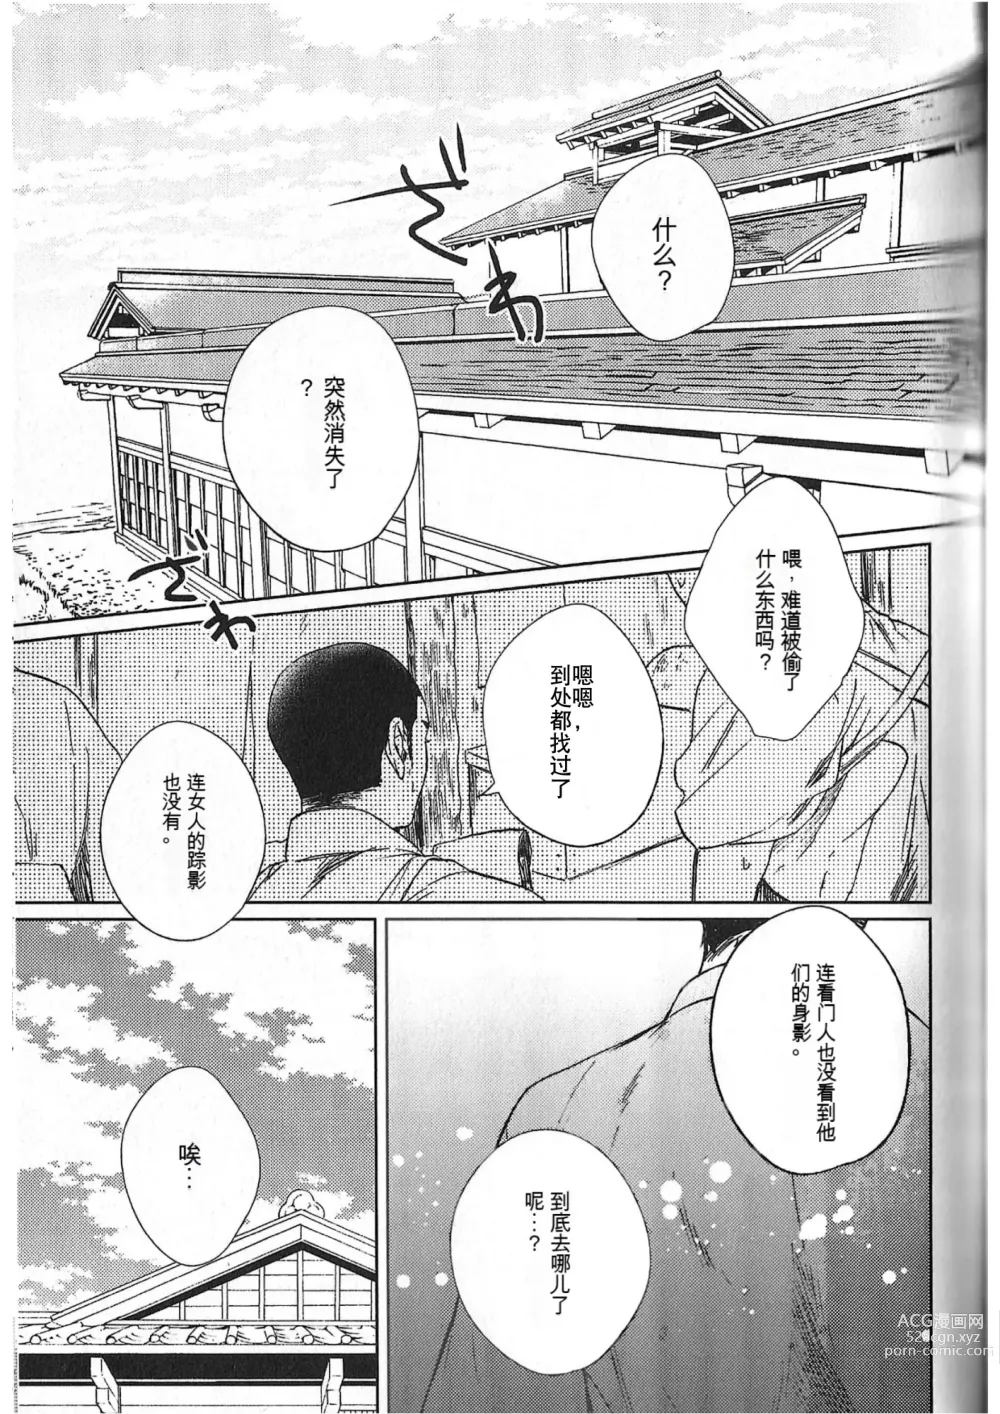 Page 6 of doujinshi 破晓之枭后篇